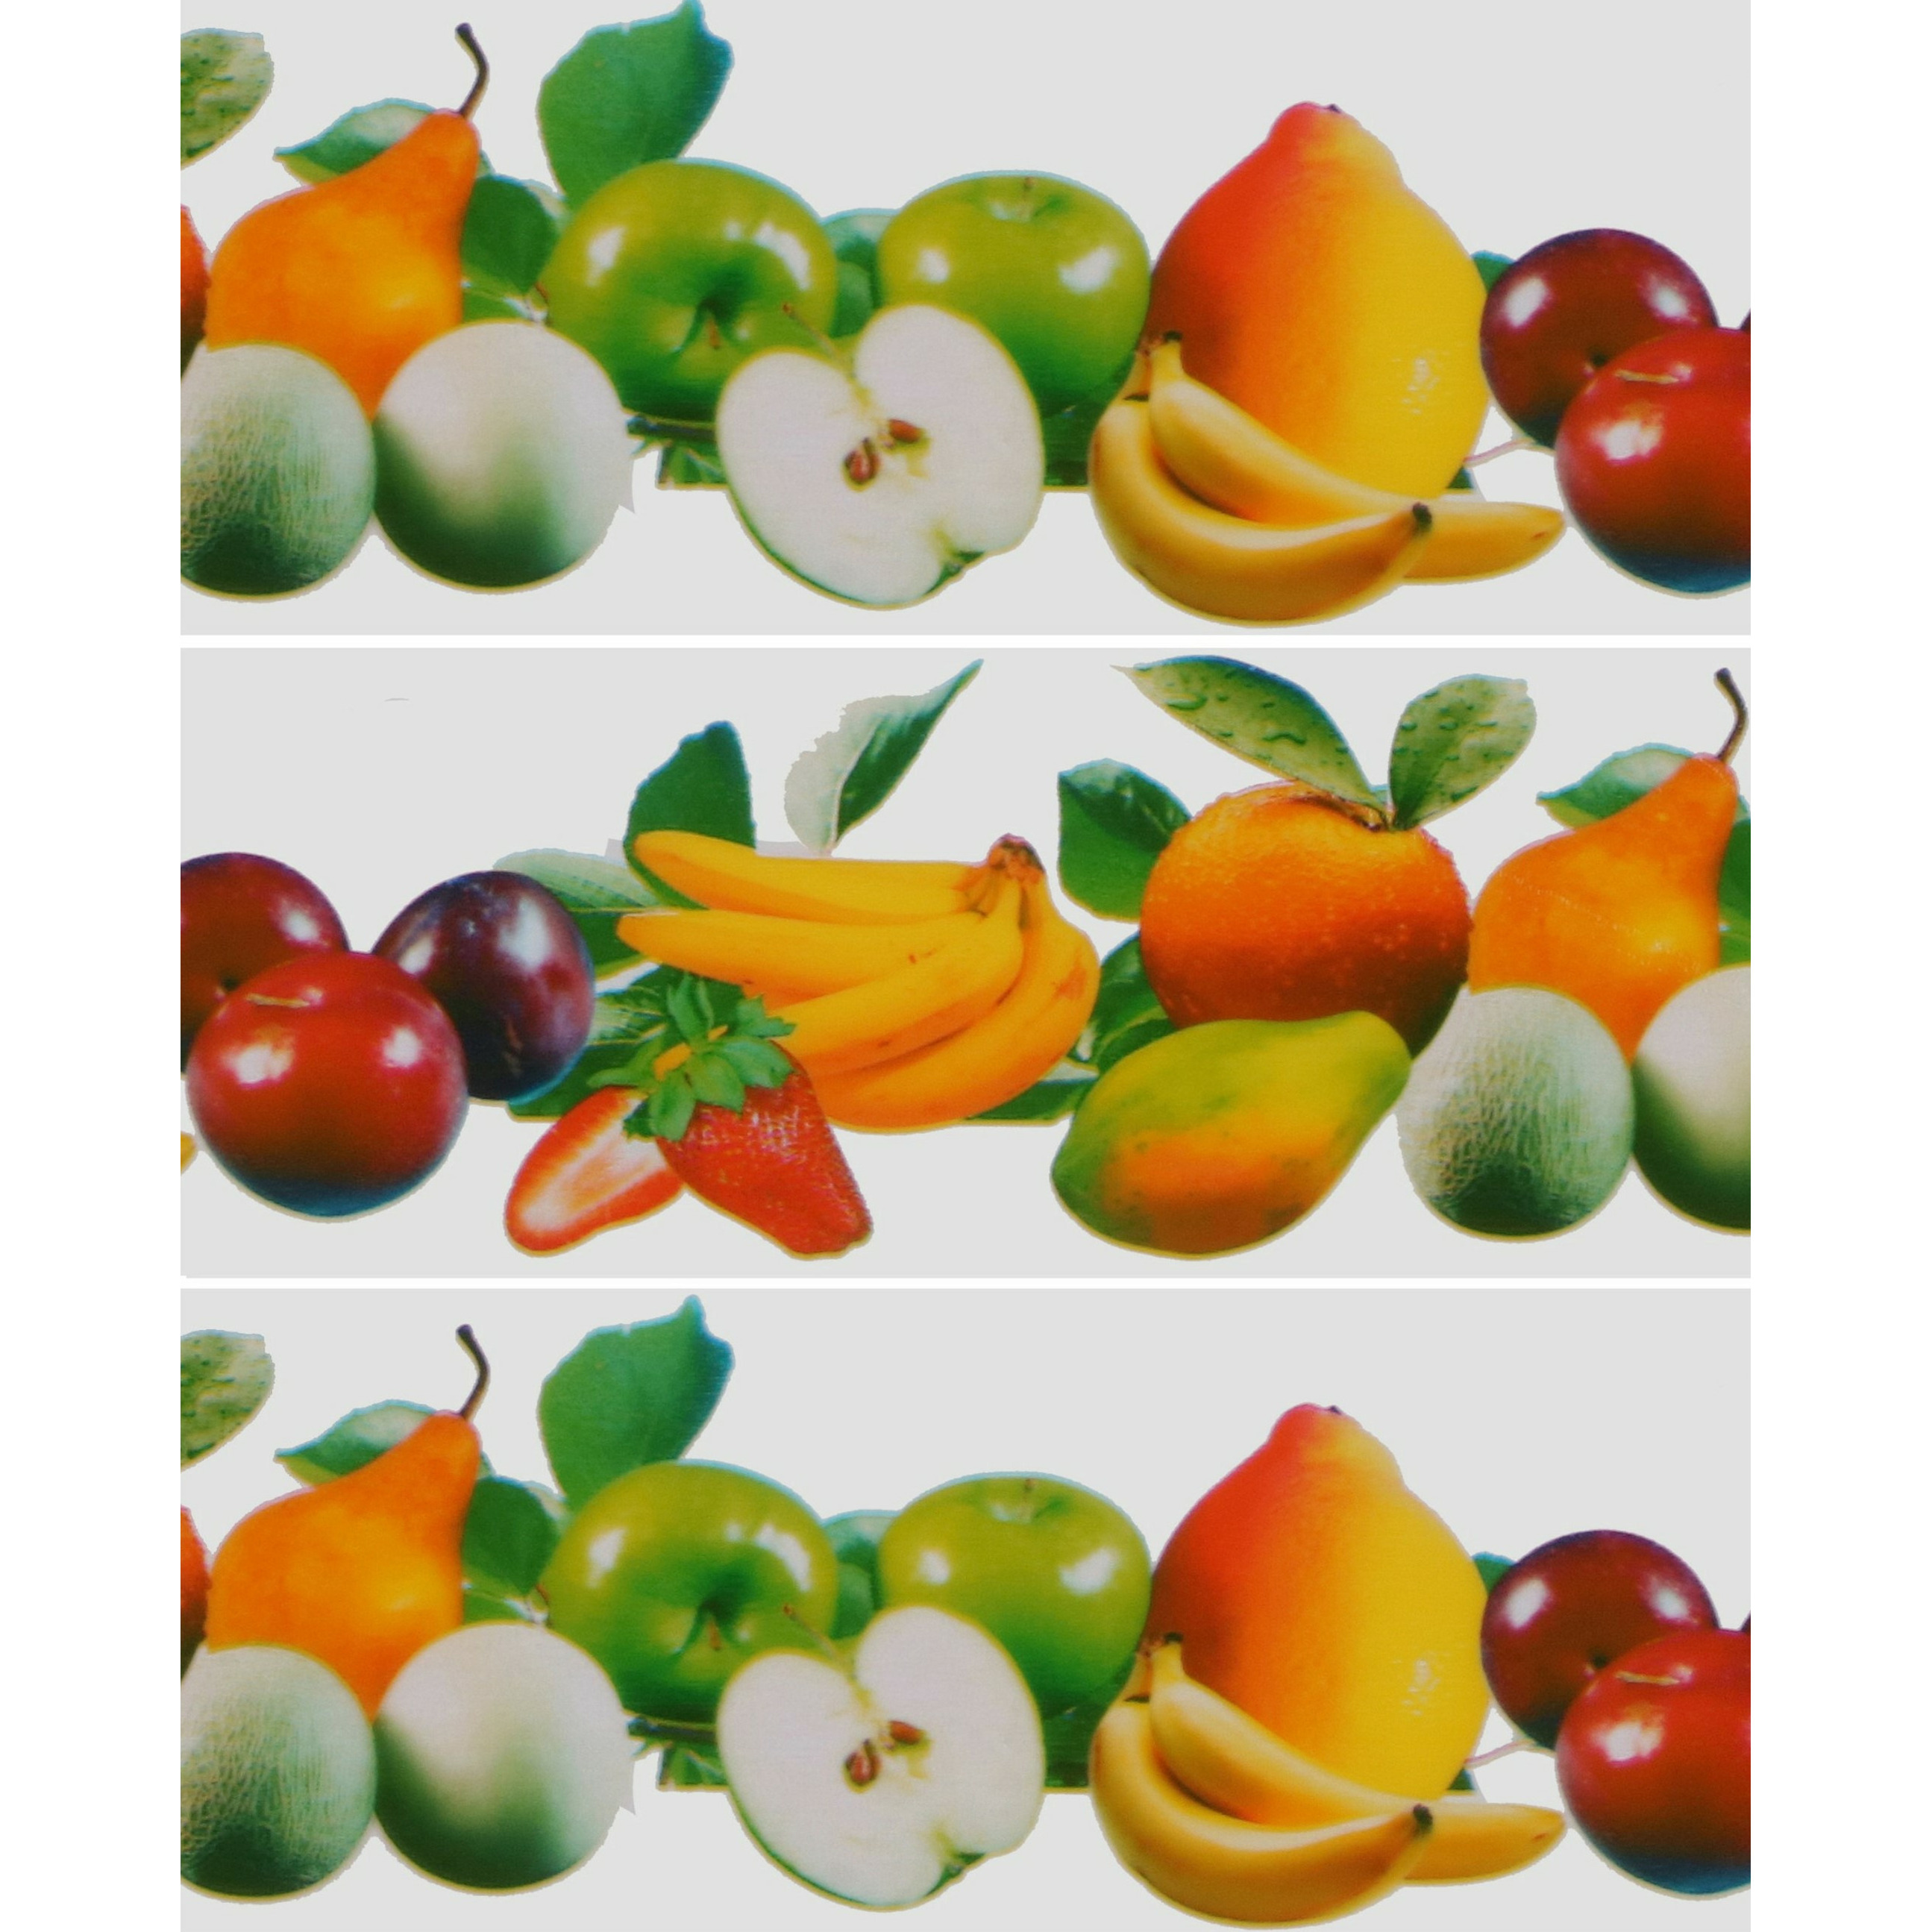 Fruitvliegjes val fruit raamstickers 9x stickers ongedierte bestrijding